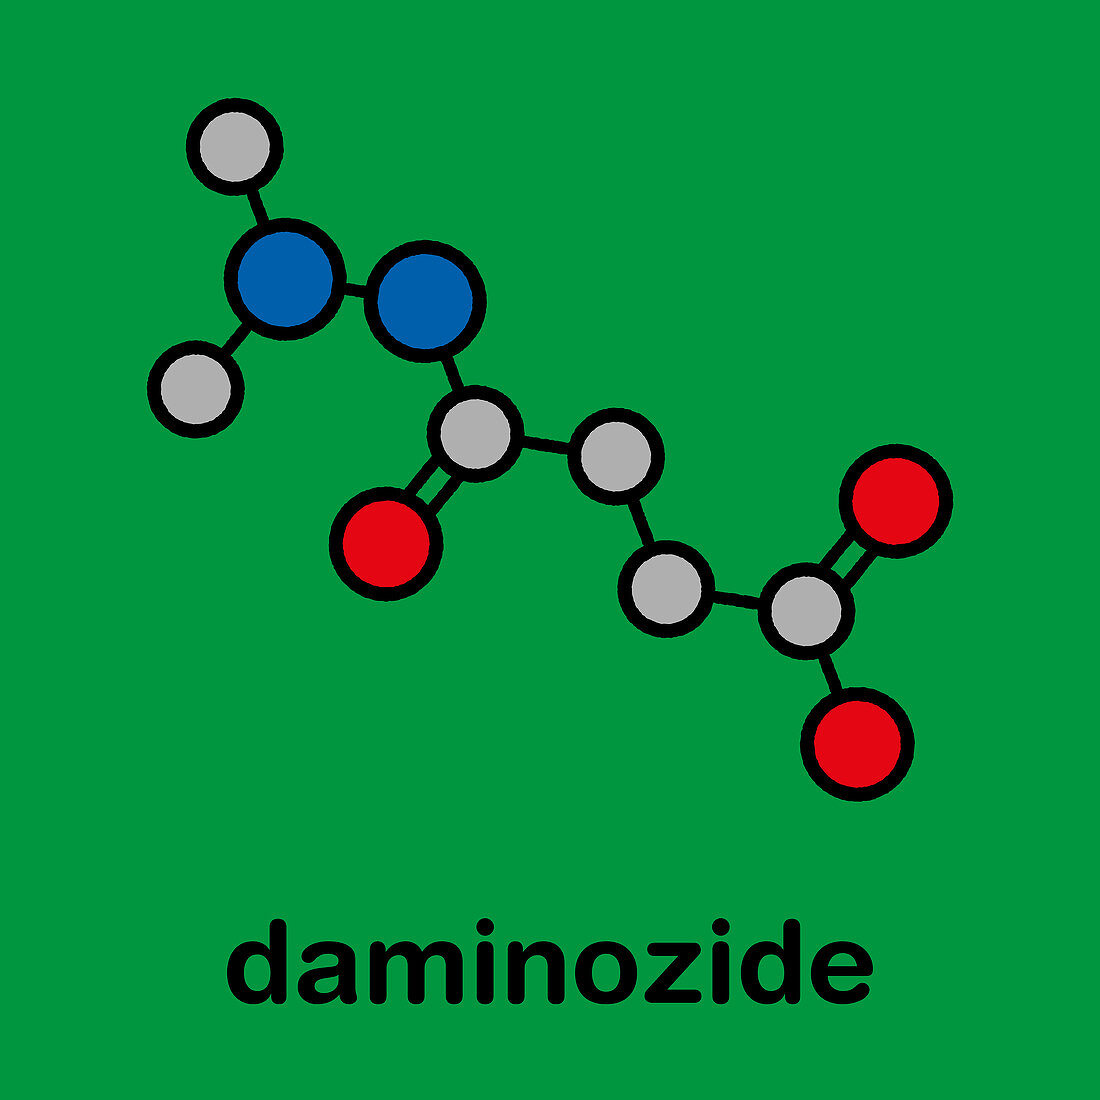 Daminozide plant growth regulator molecule, illustration